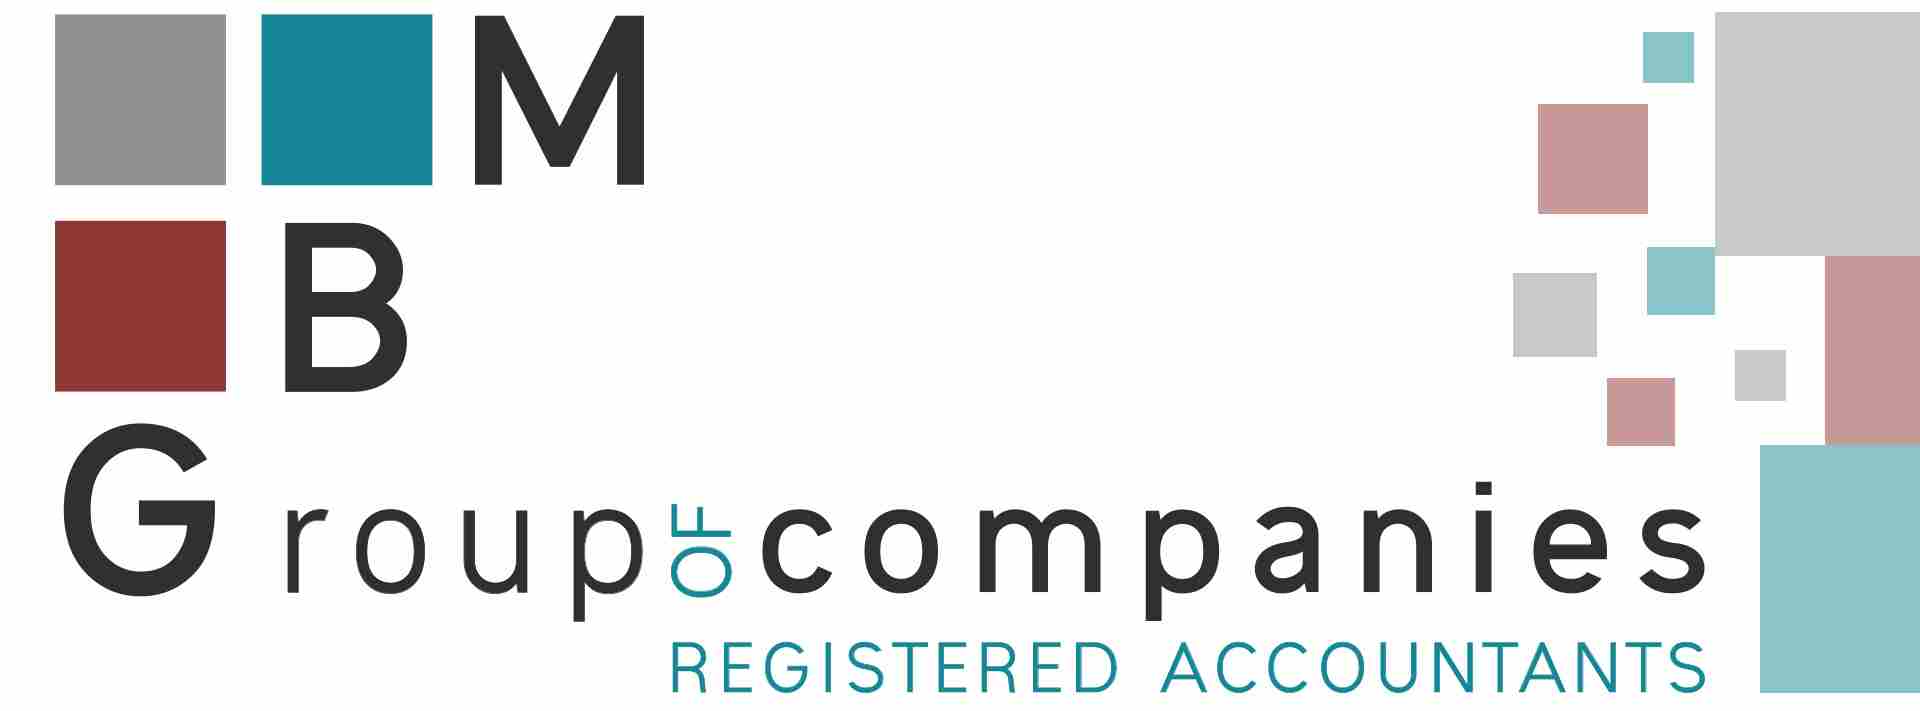 GBM accountants logo